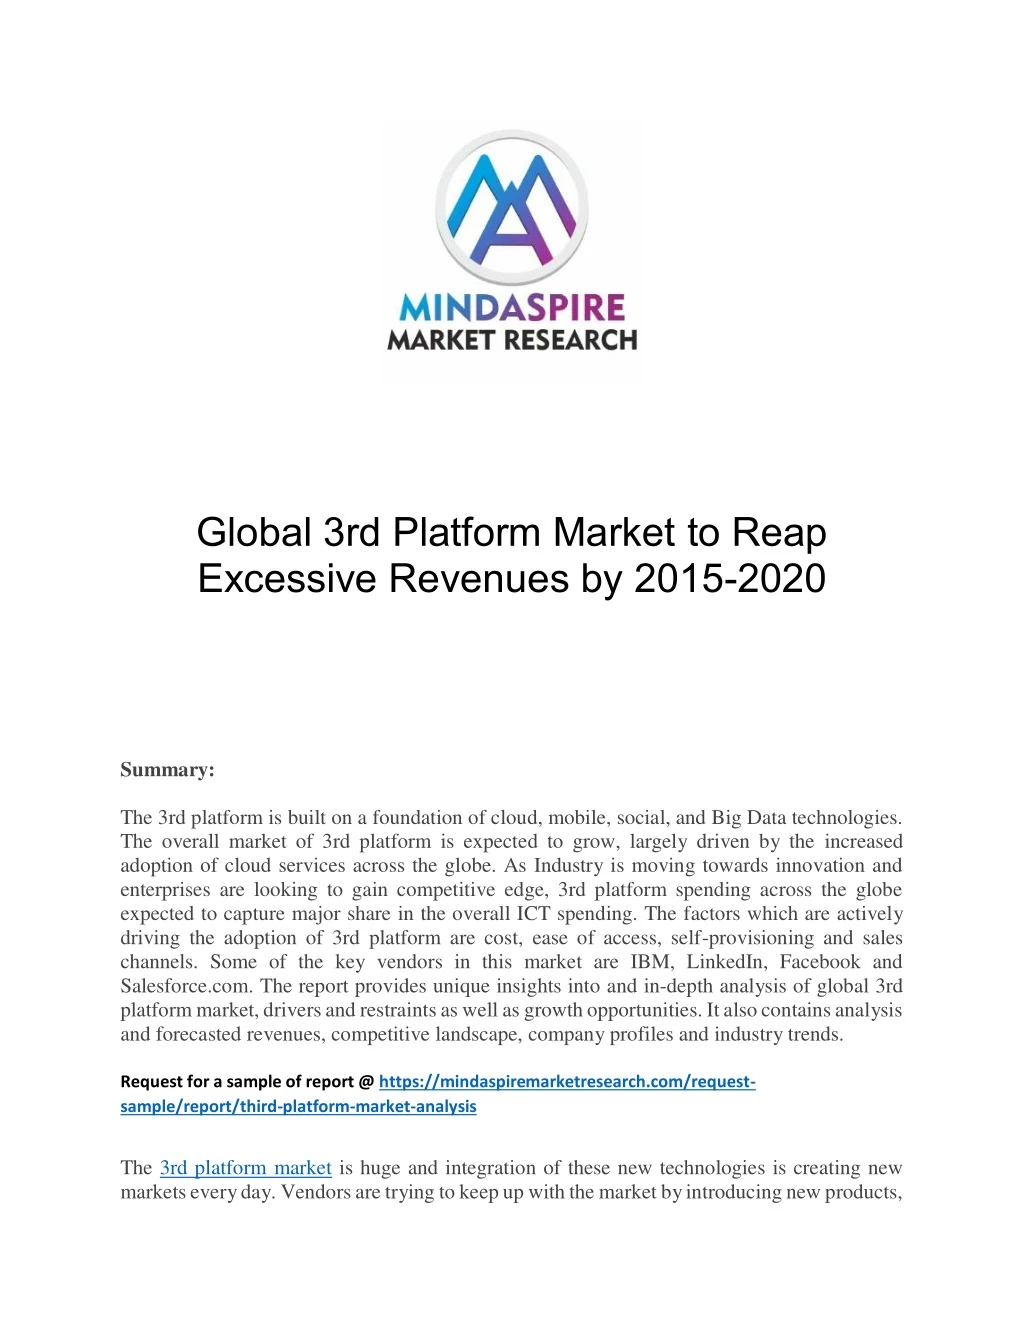 global 3rd platform market to reap excessive